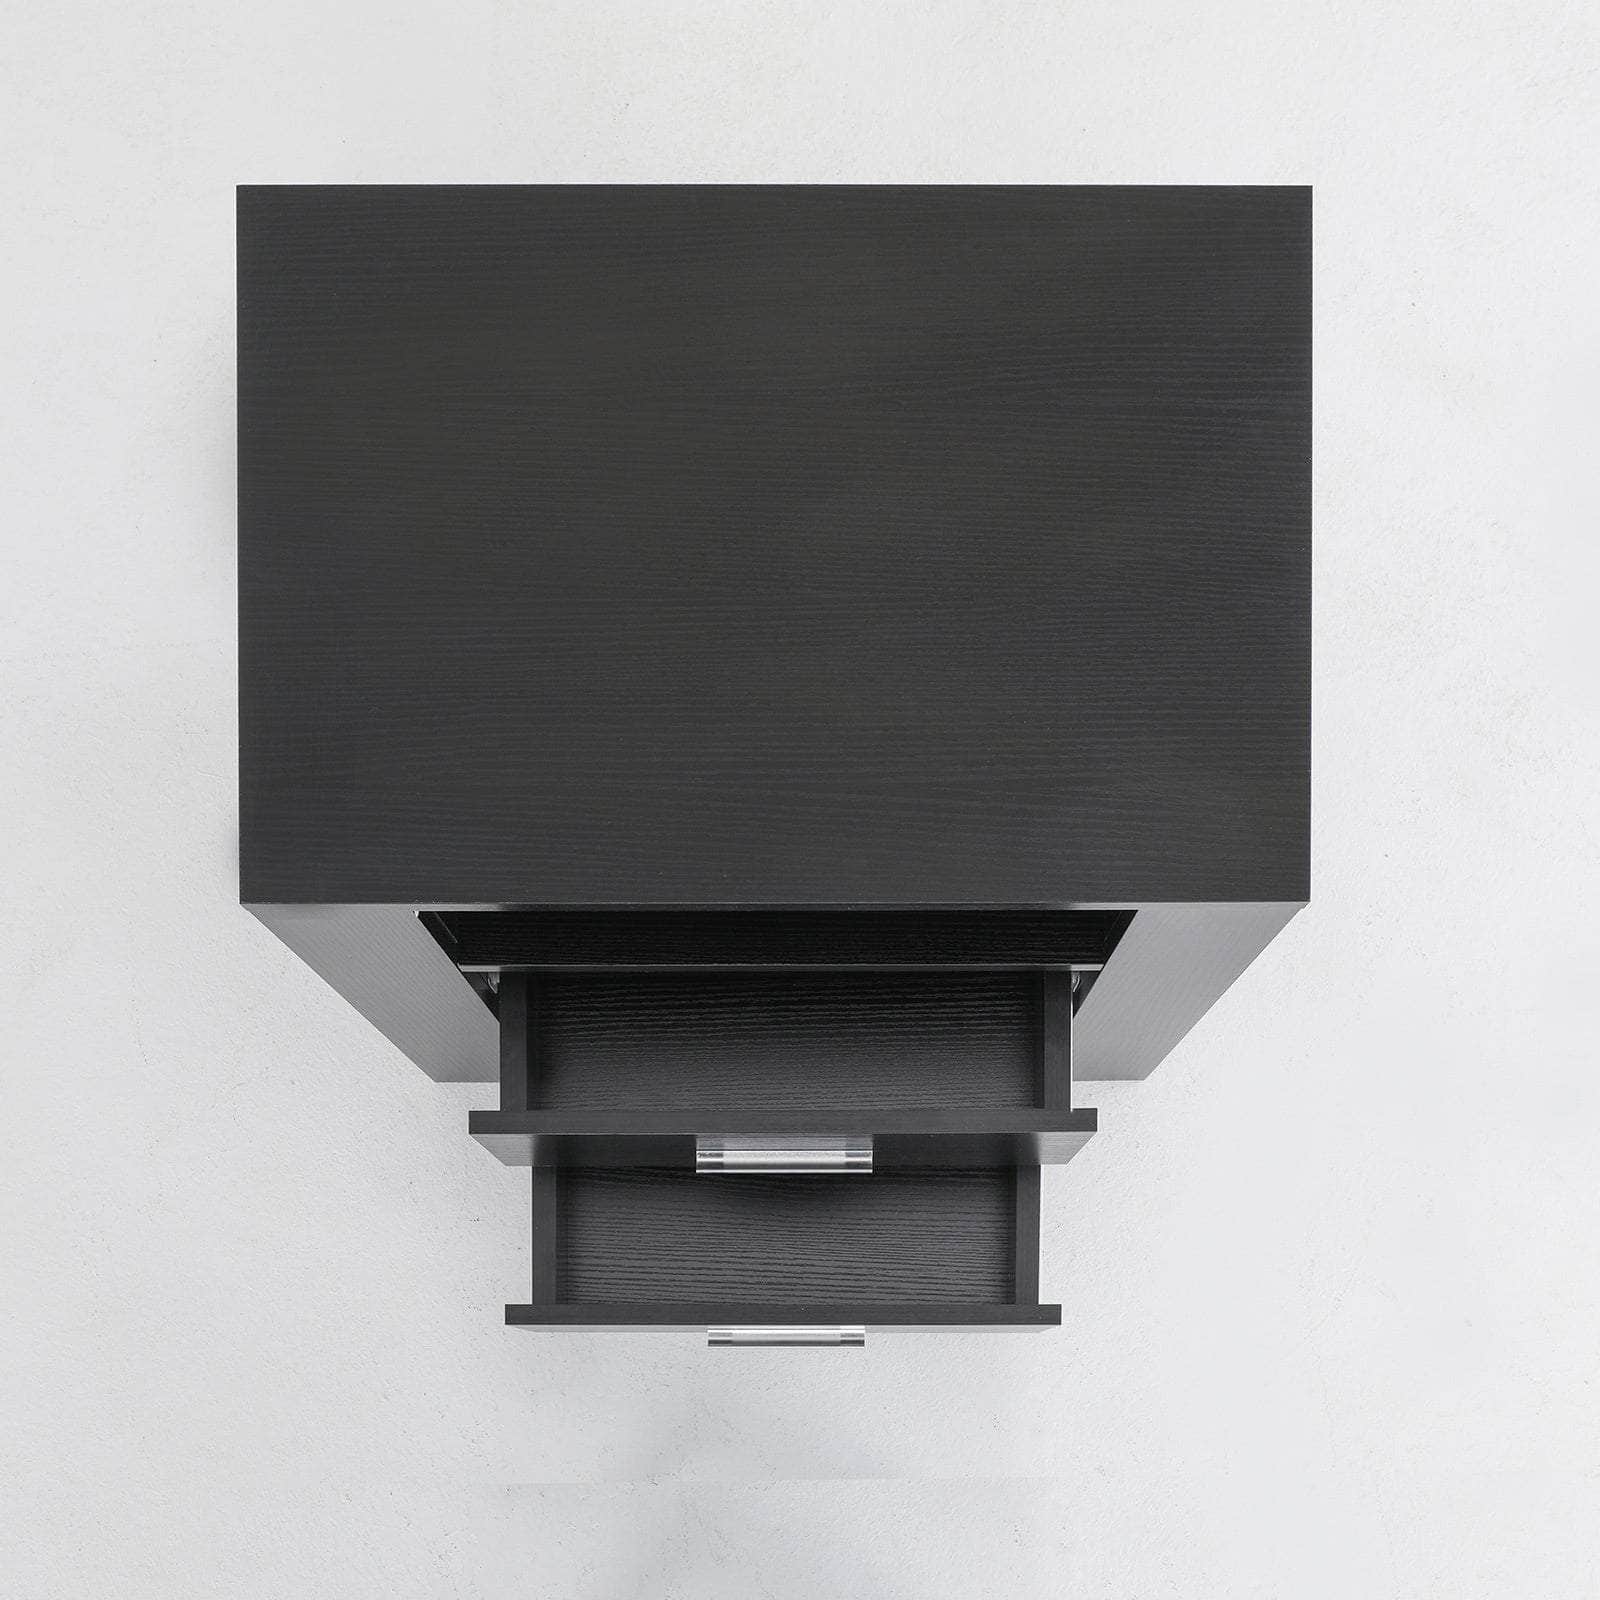 Zuri Black: Modern Nightstand With Double Drawers And Shelf